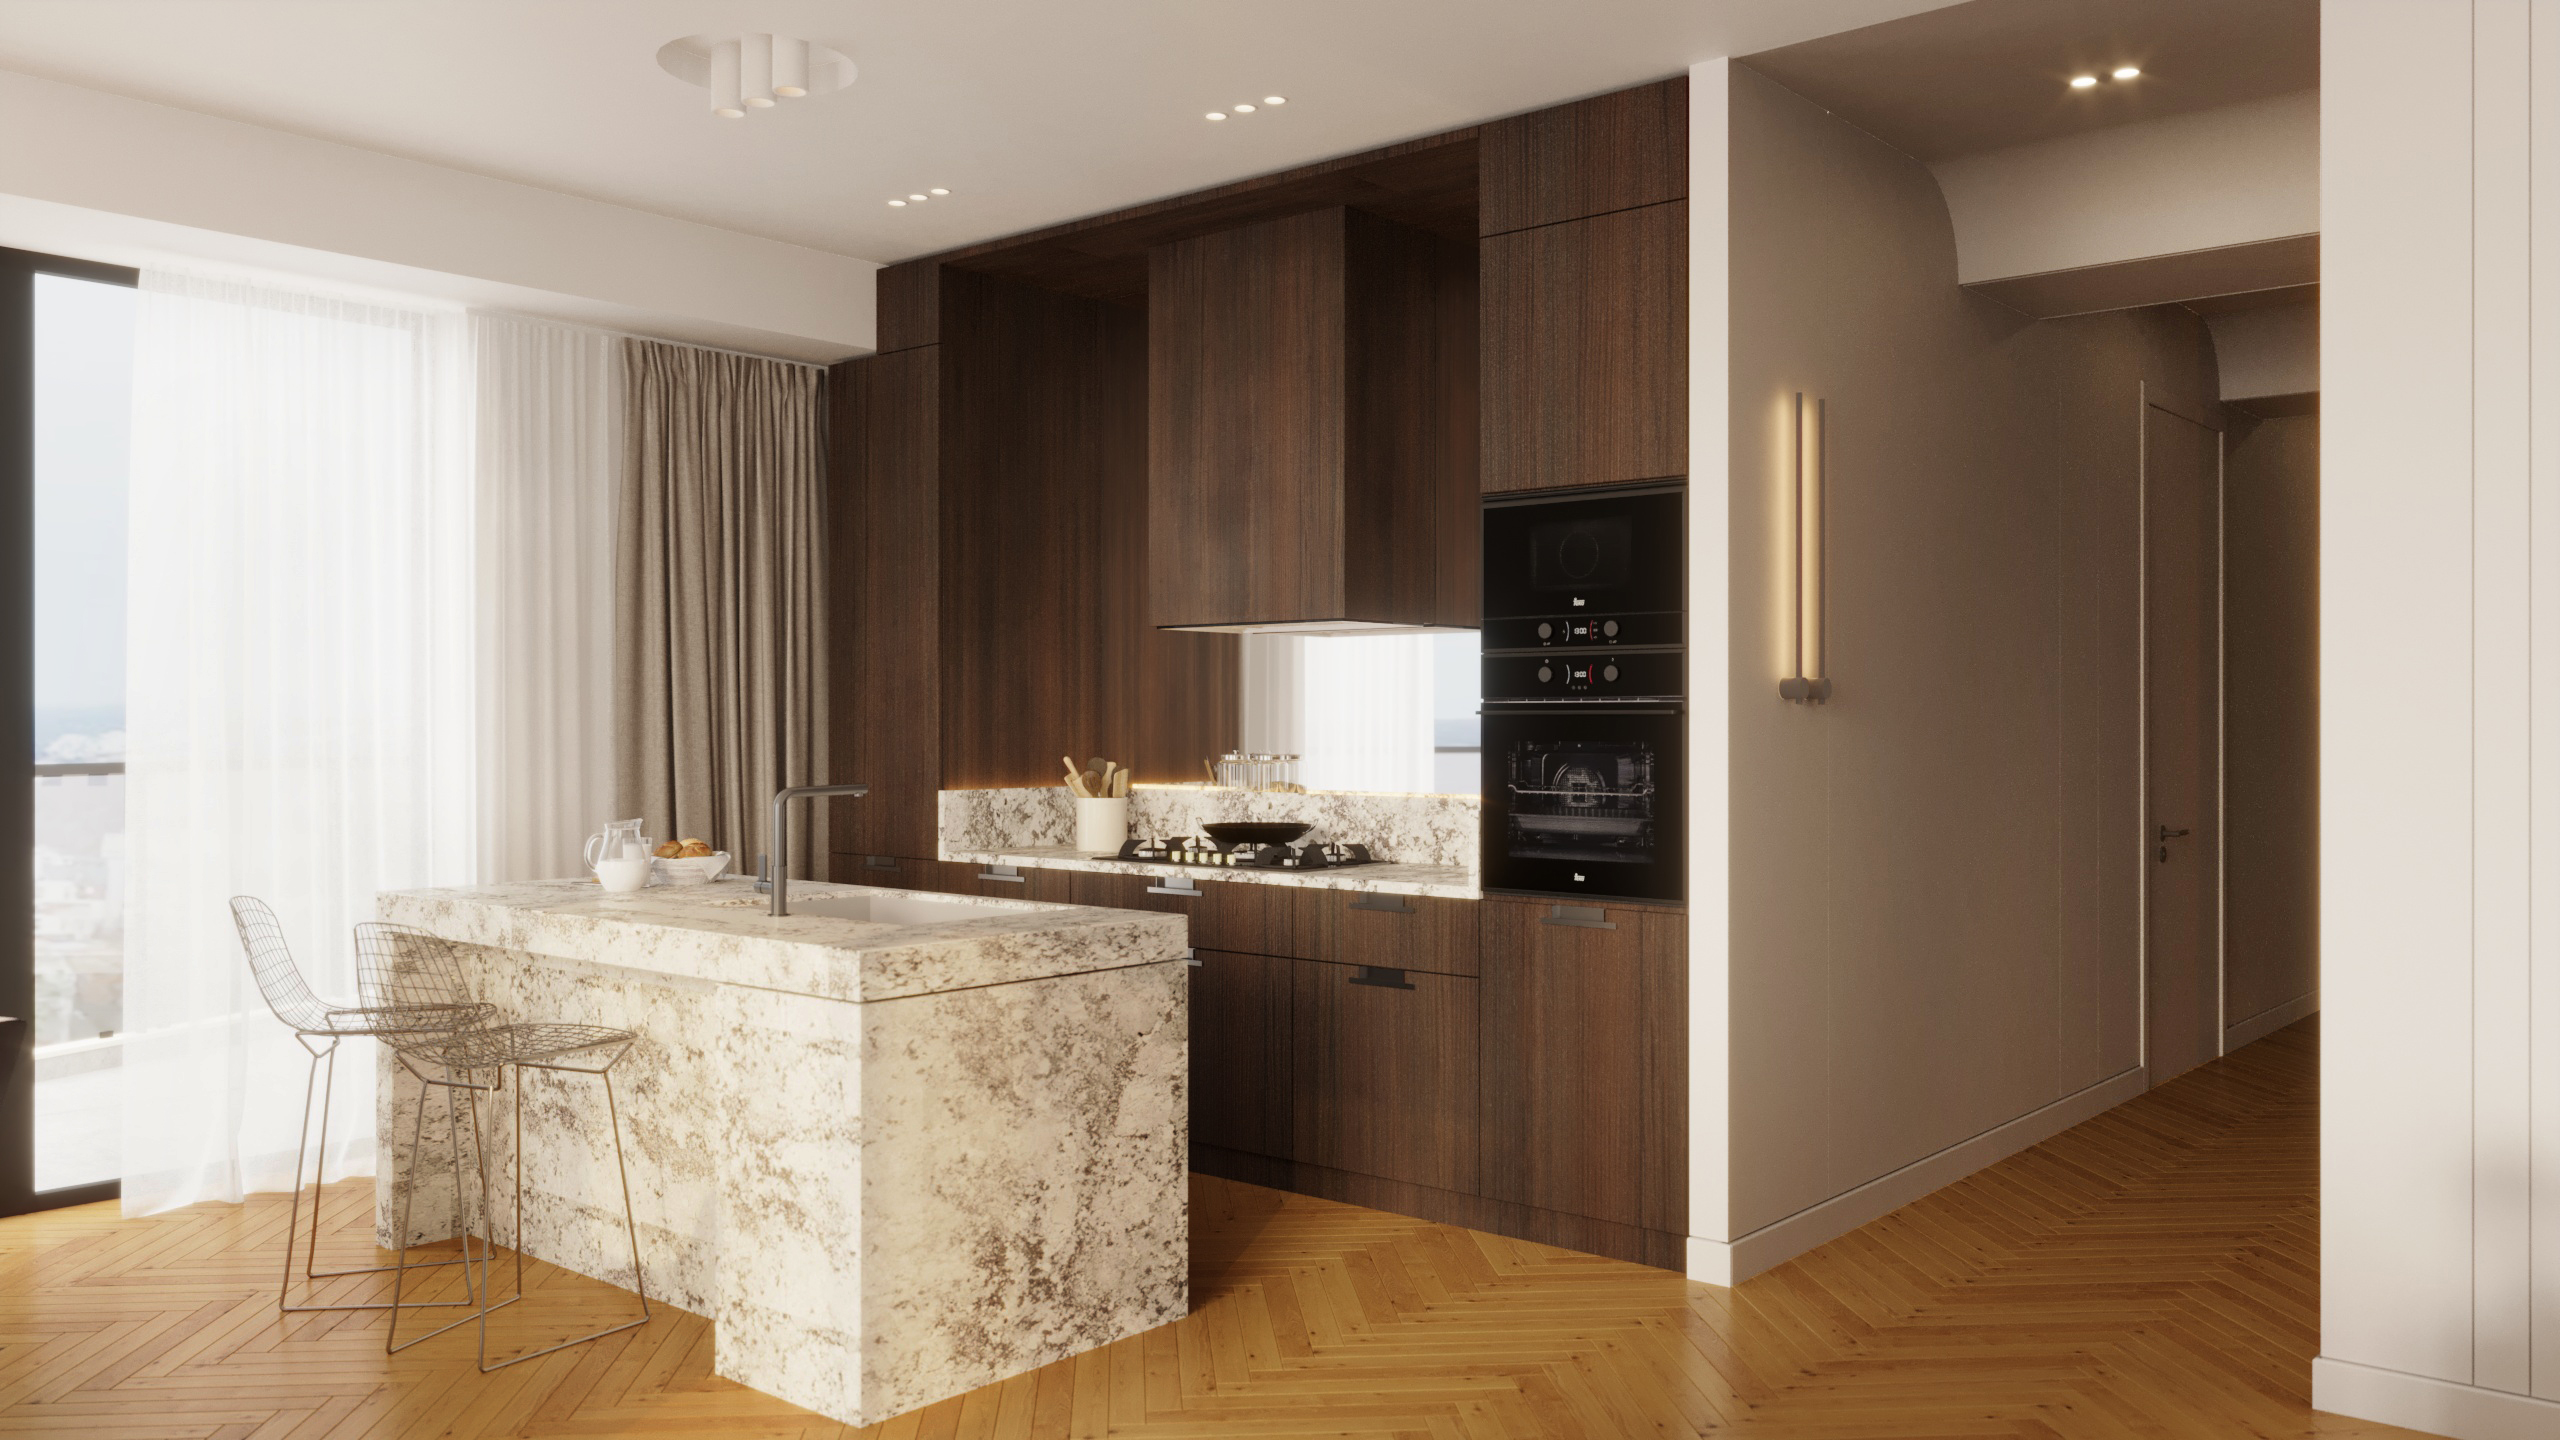 Kitchen interior design with marble tiles